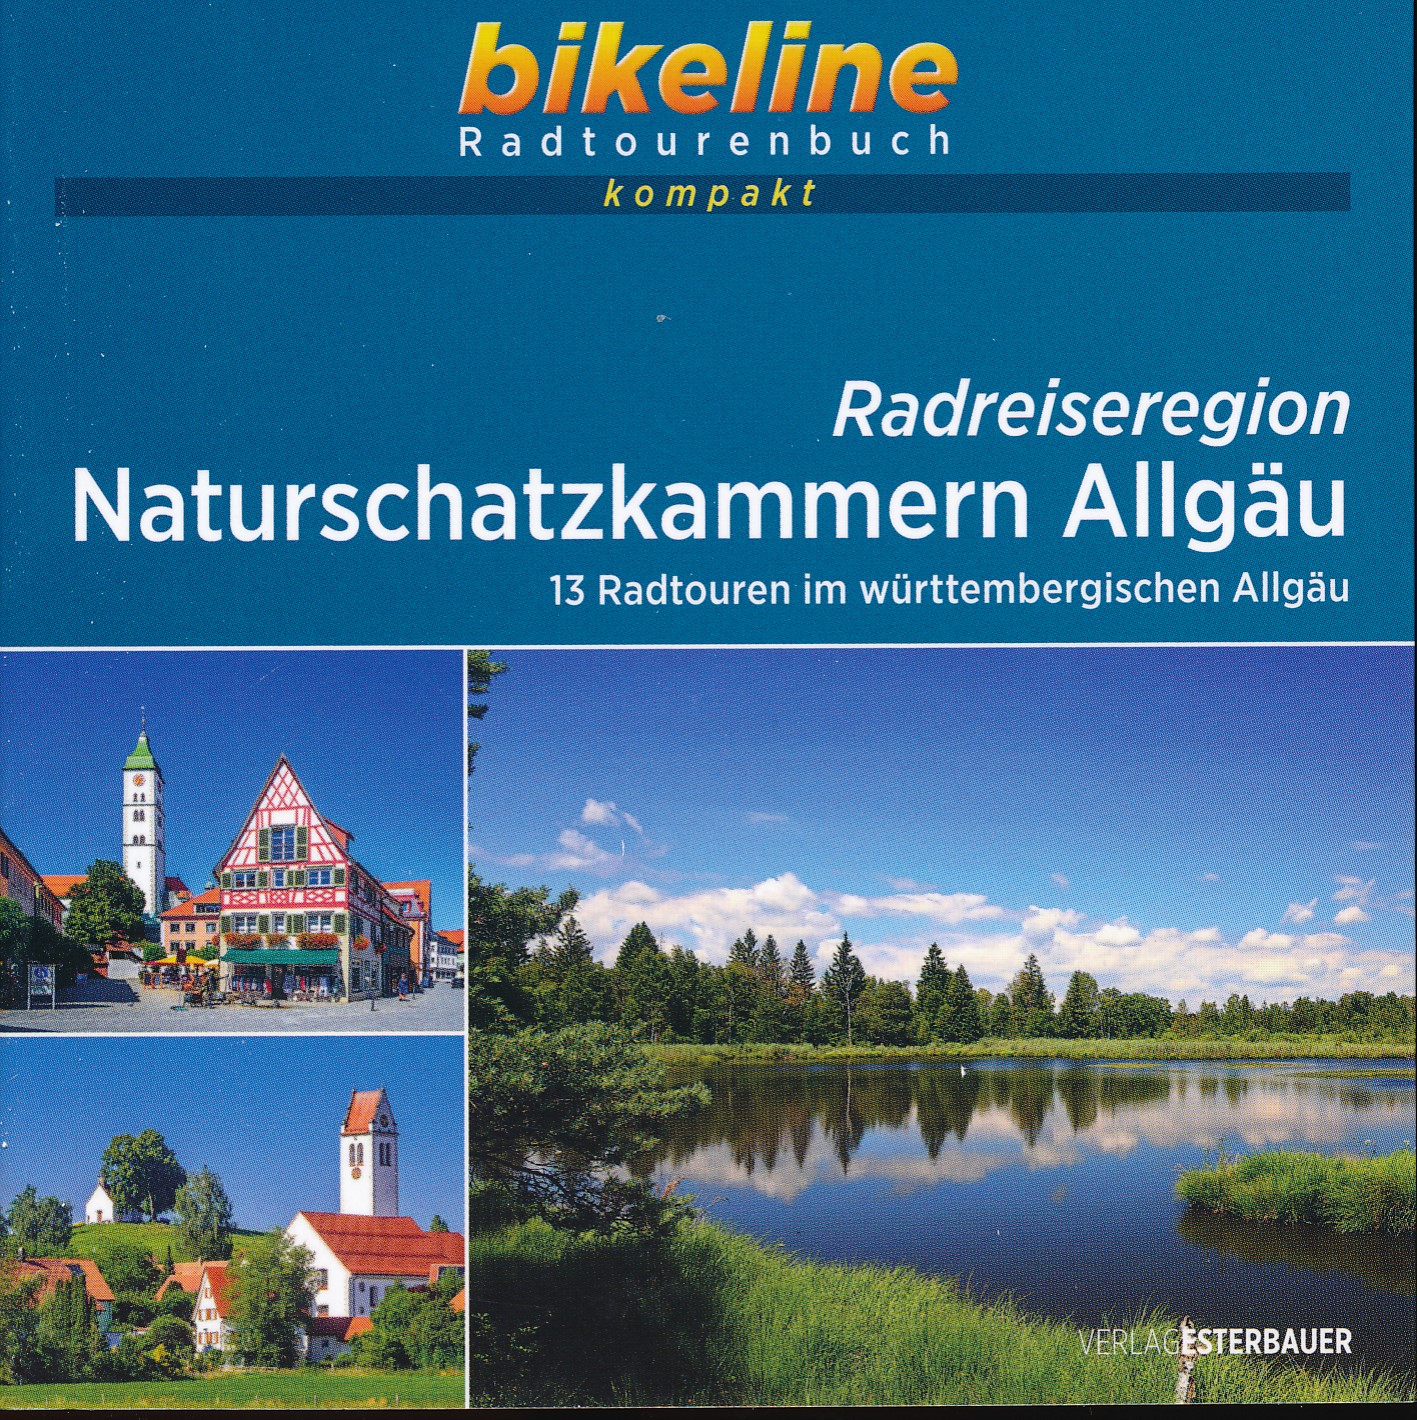 Online bestellen: Fietsgids Bikeline Radtourenbuch kompakt Naturschatzkammer Allgäu | Esterbauer